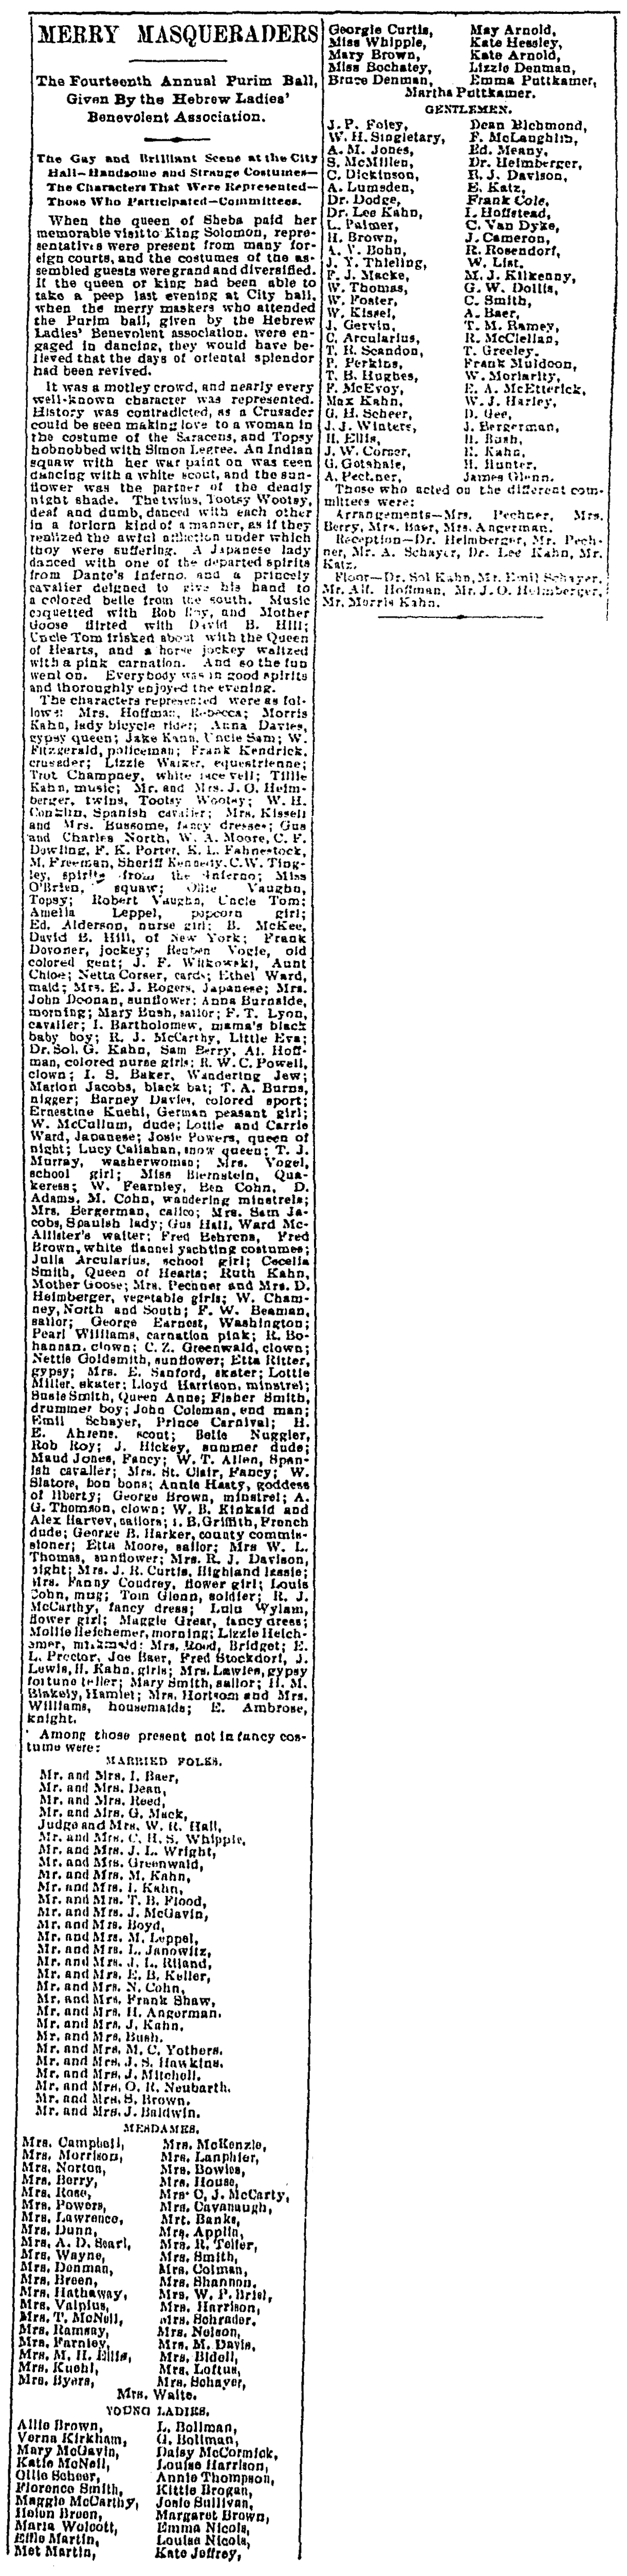 The Evening Chronicle. Friday, February 26, 1892.